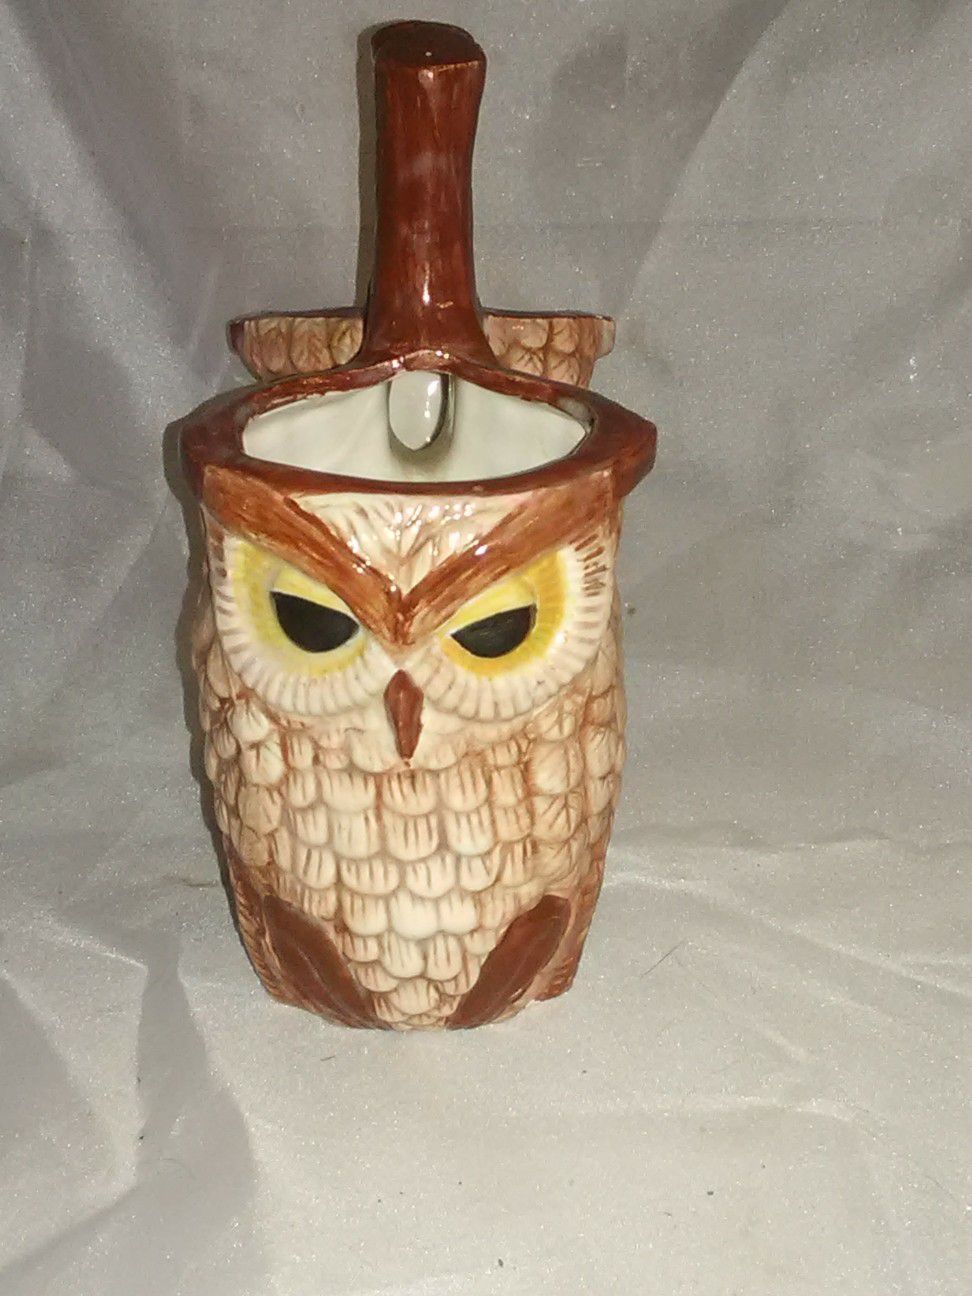 Dual ceramic Owl flower pots 8" tall 6.5" wide